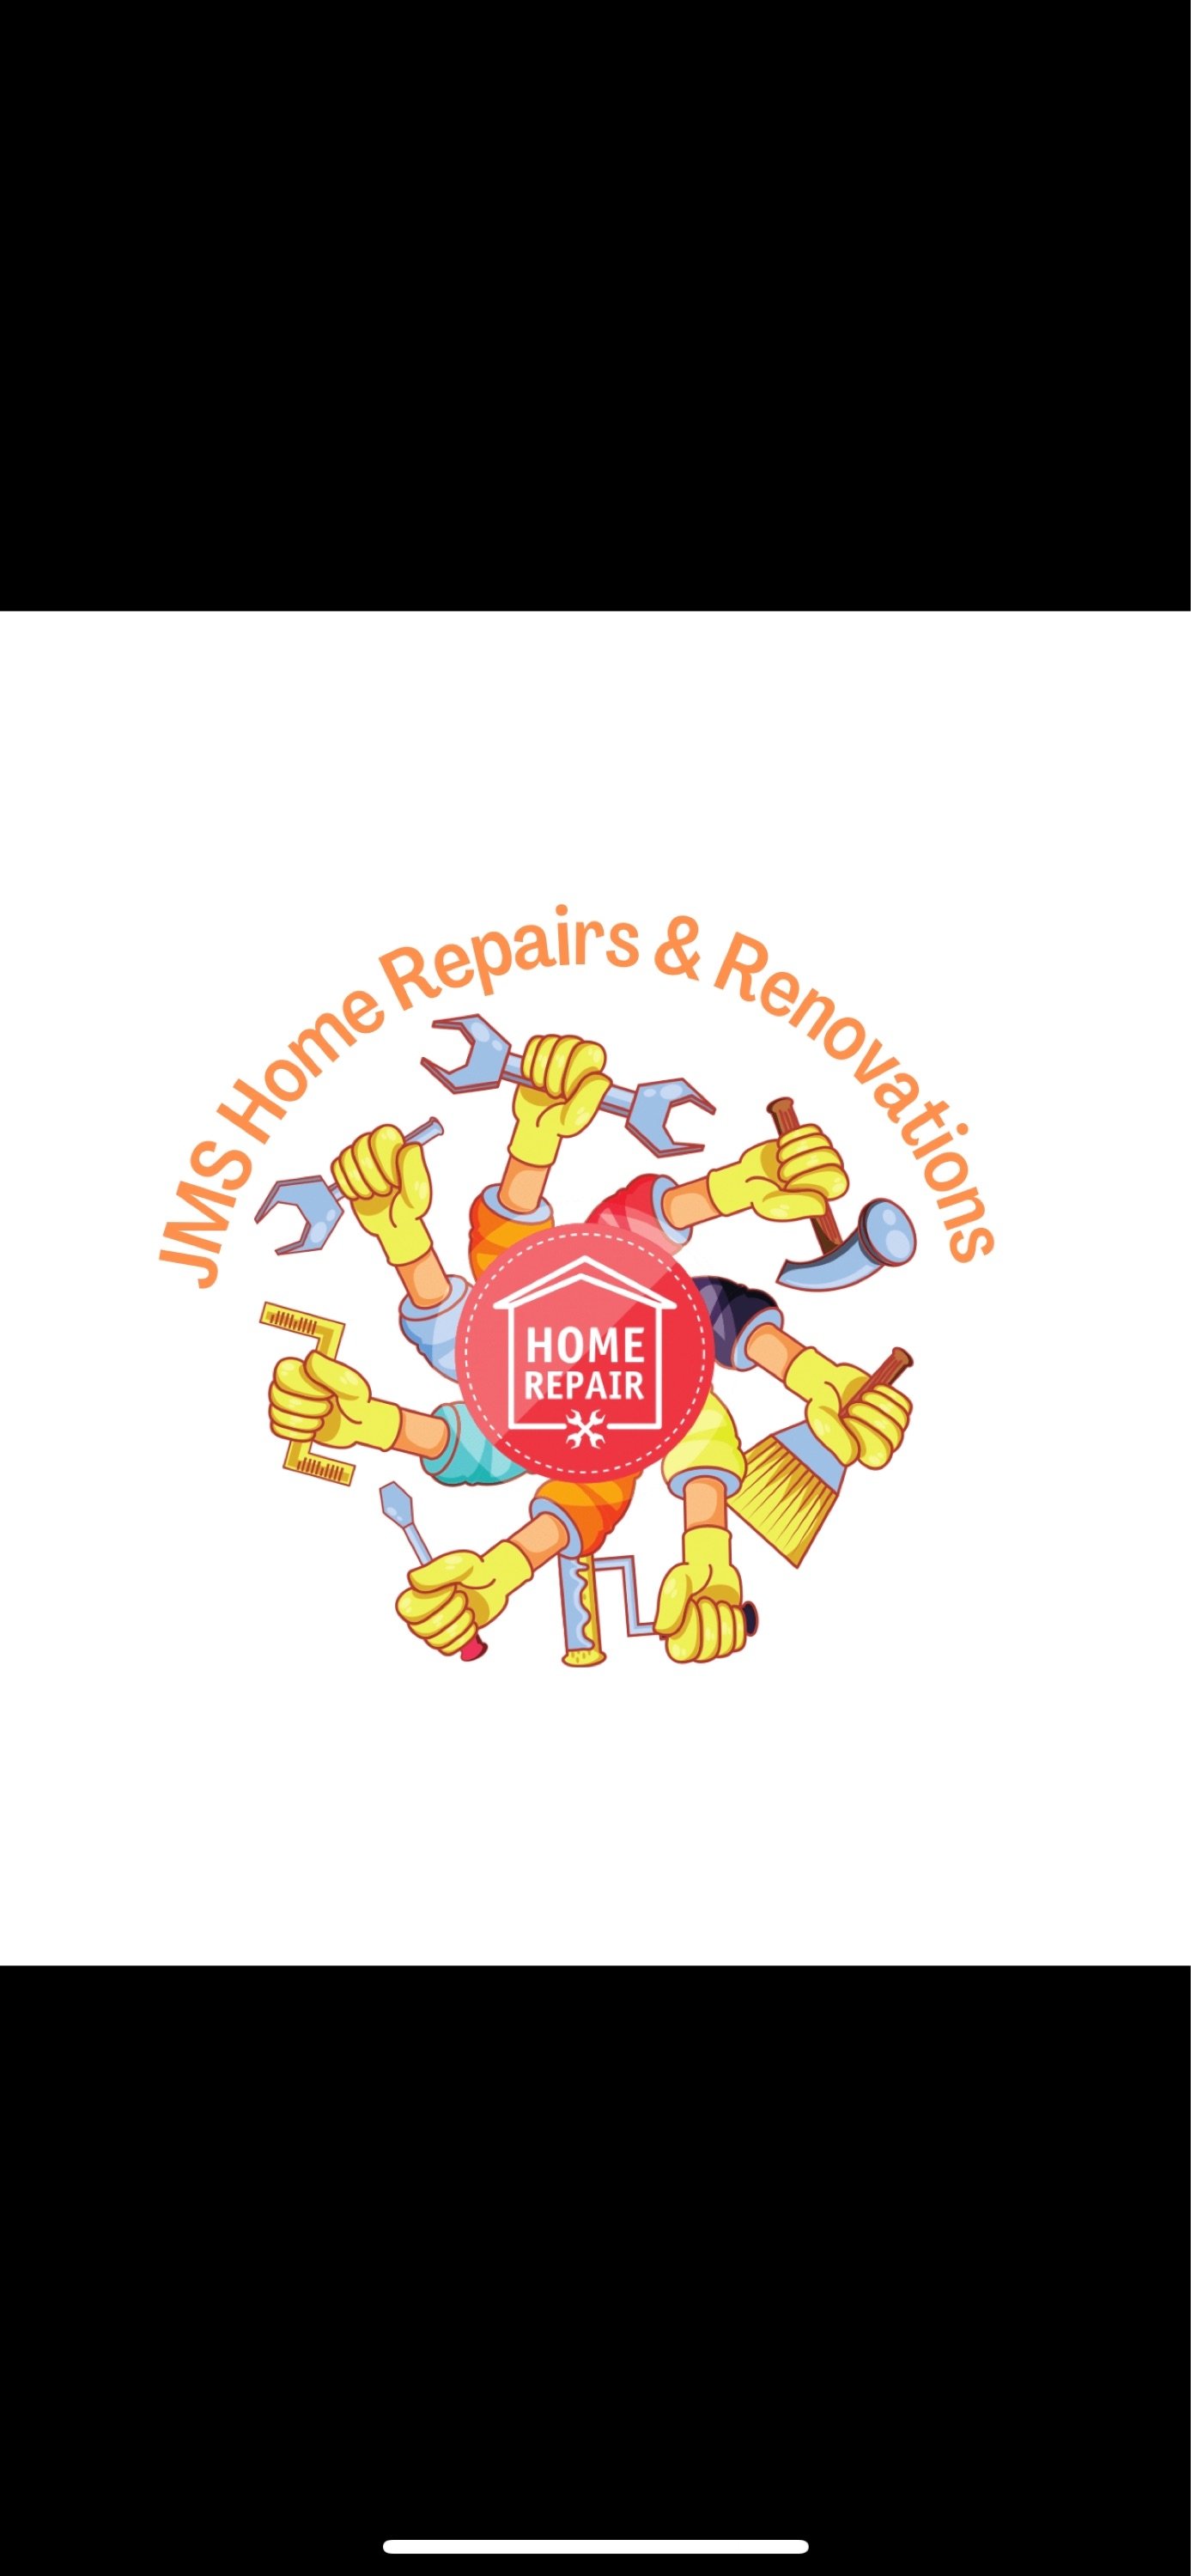 Handy Home Service & Repair Logo